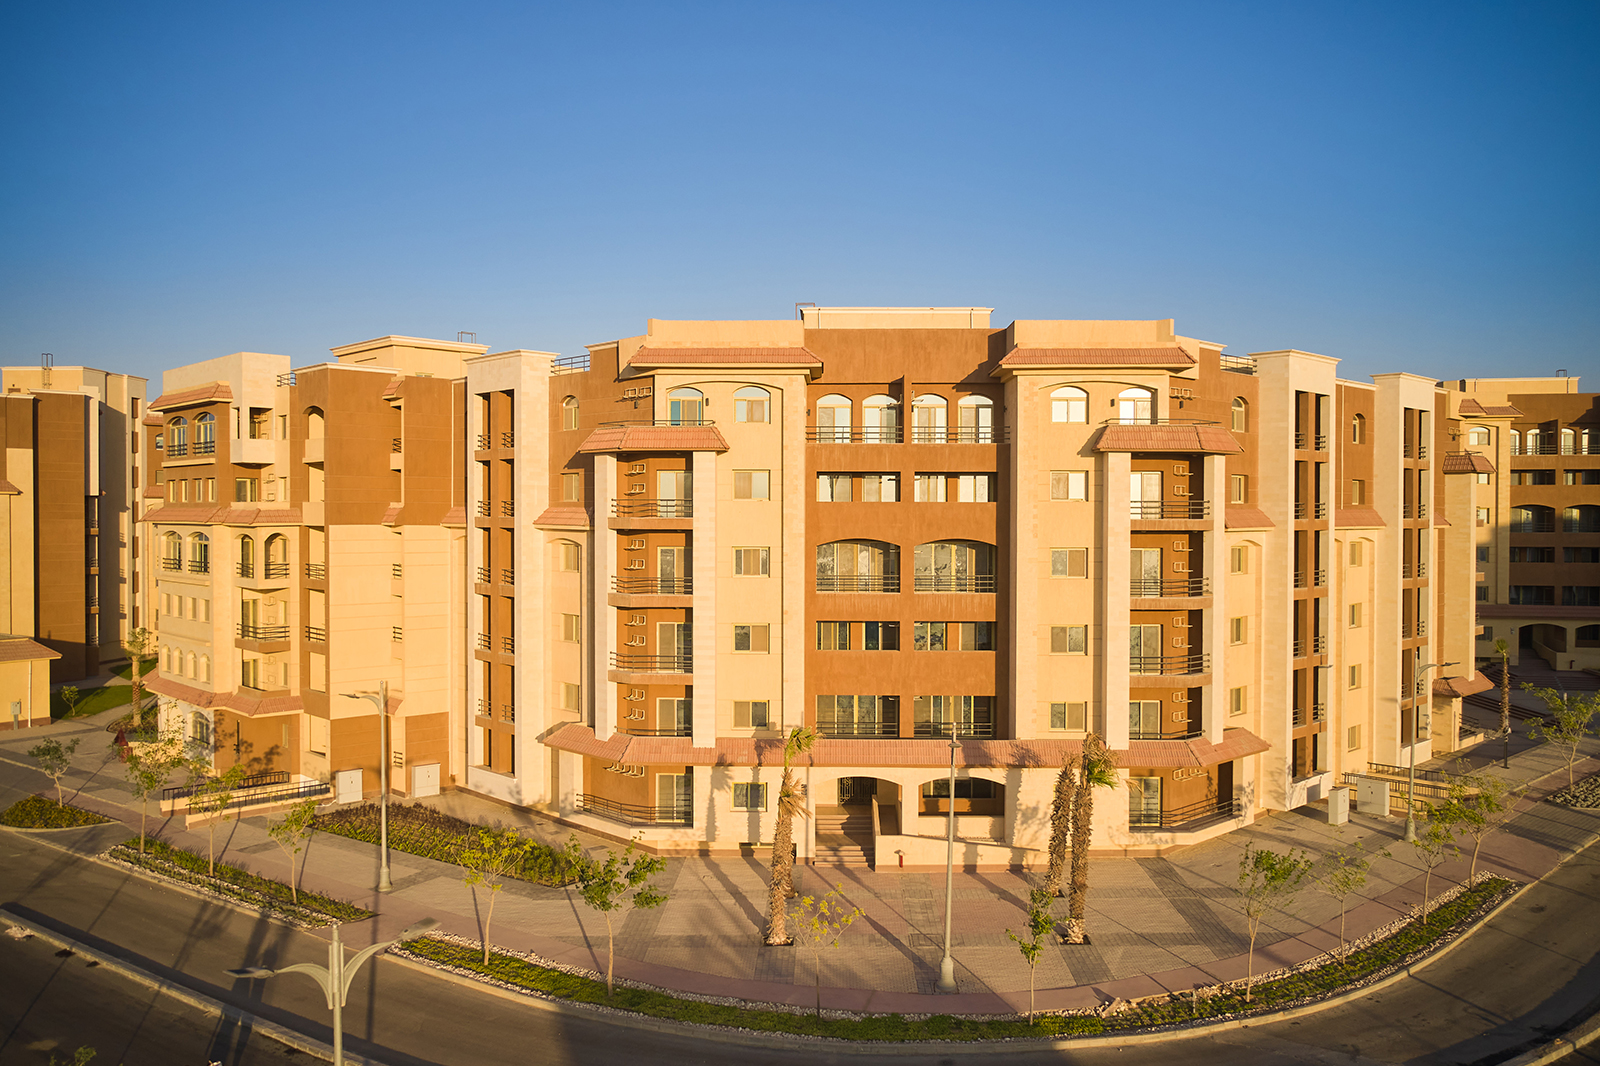 AlMaqsad Residencesconstructions